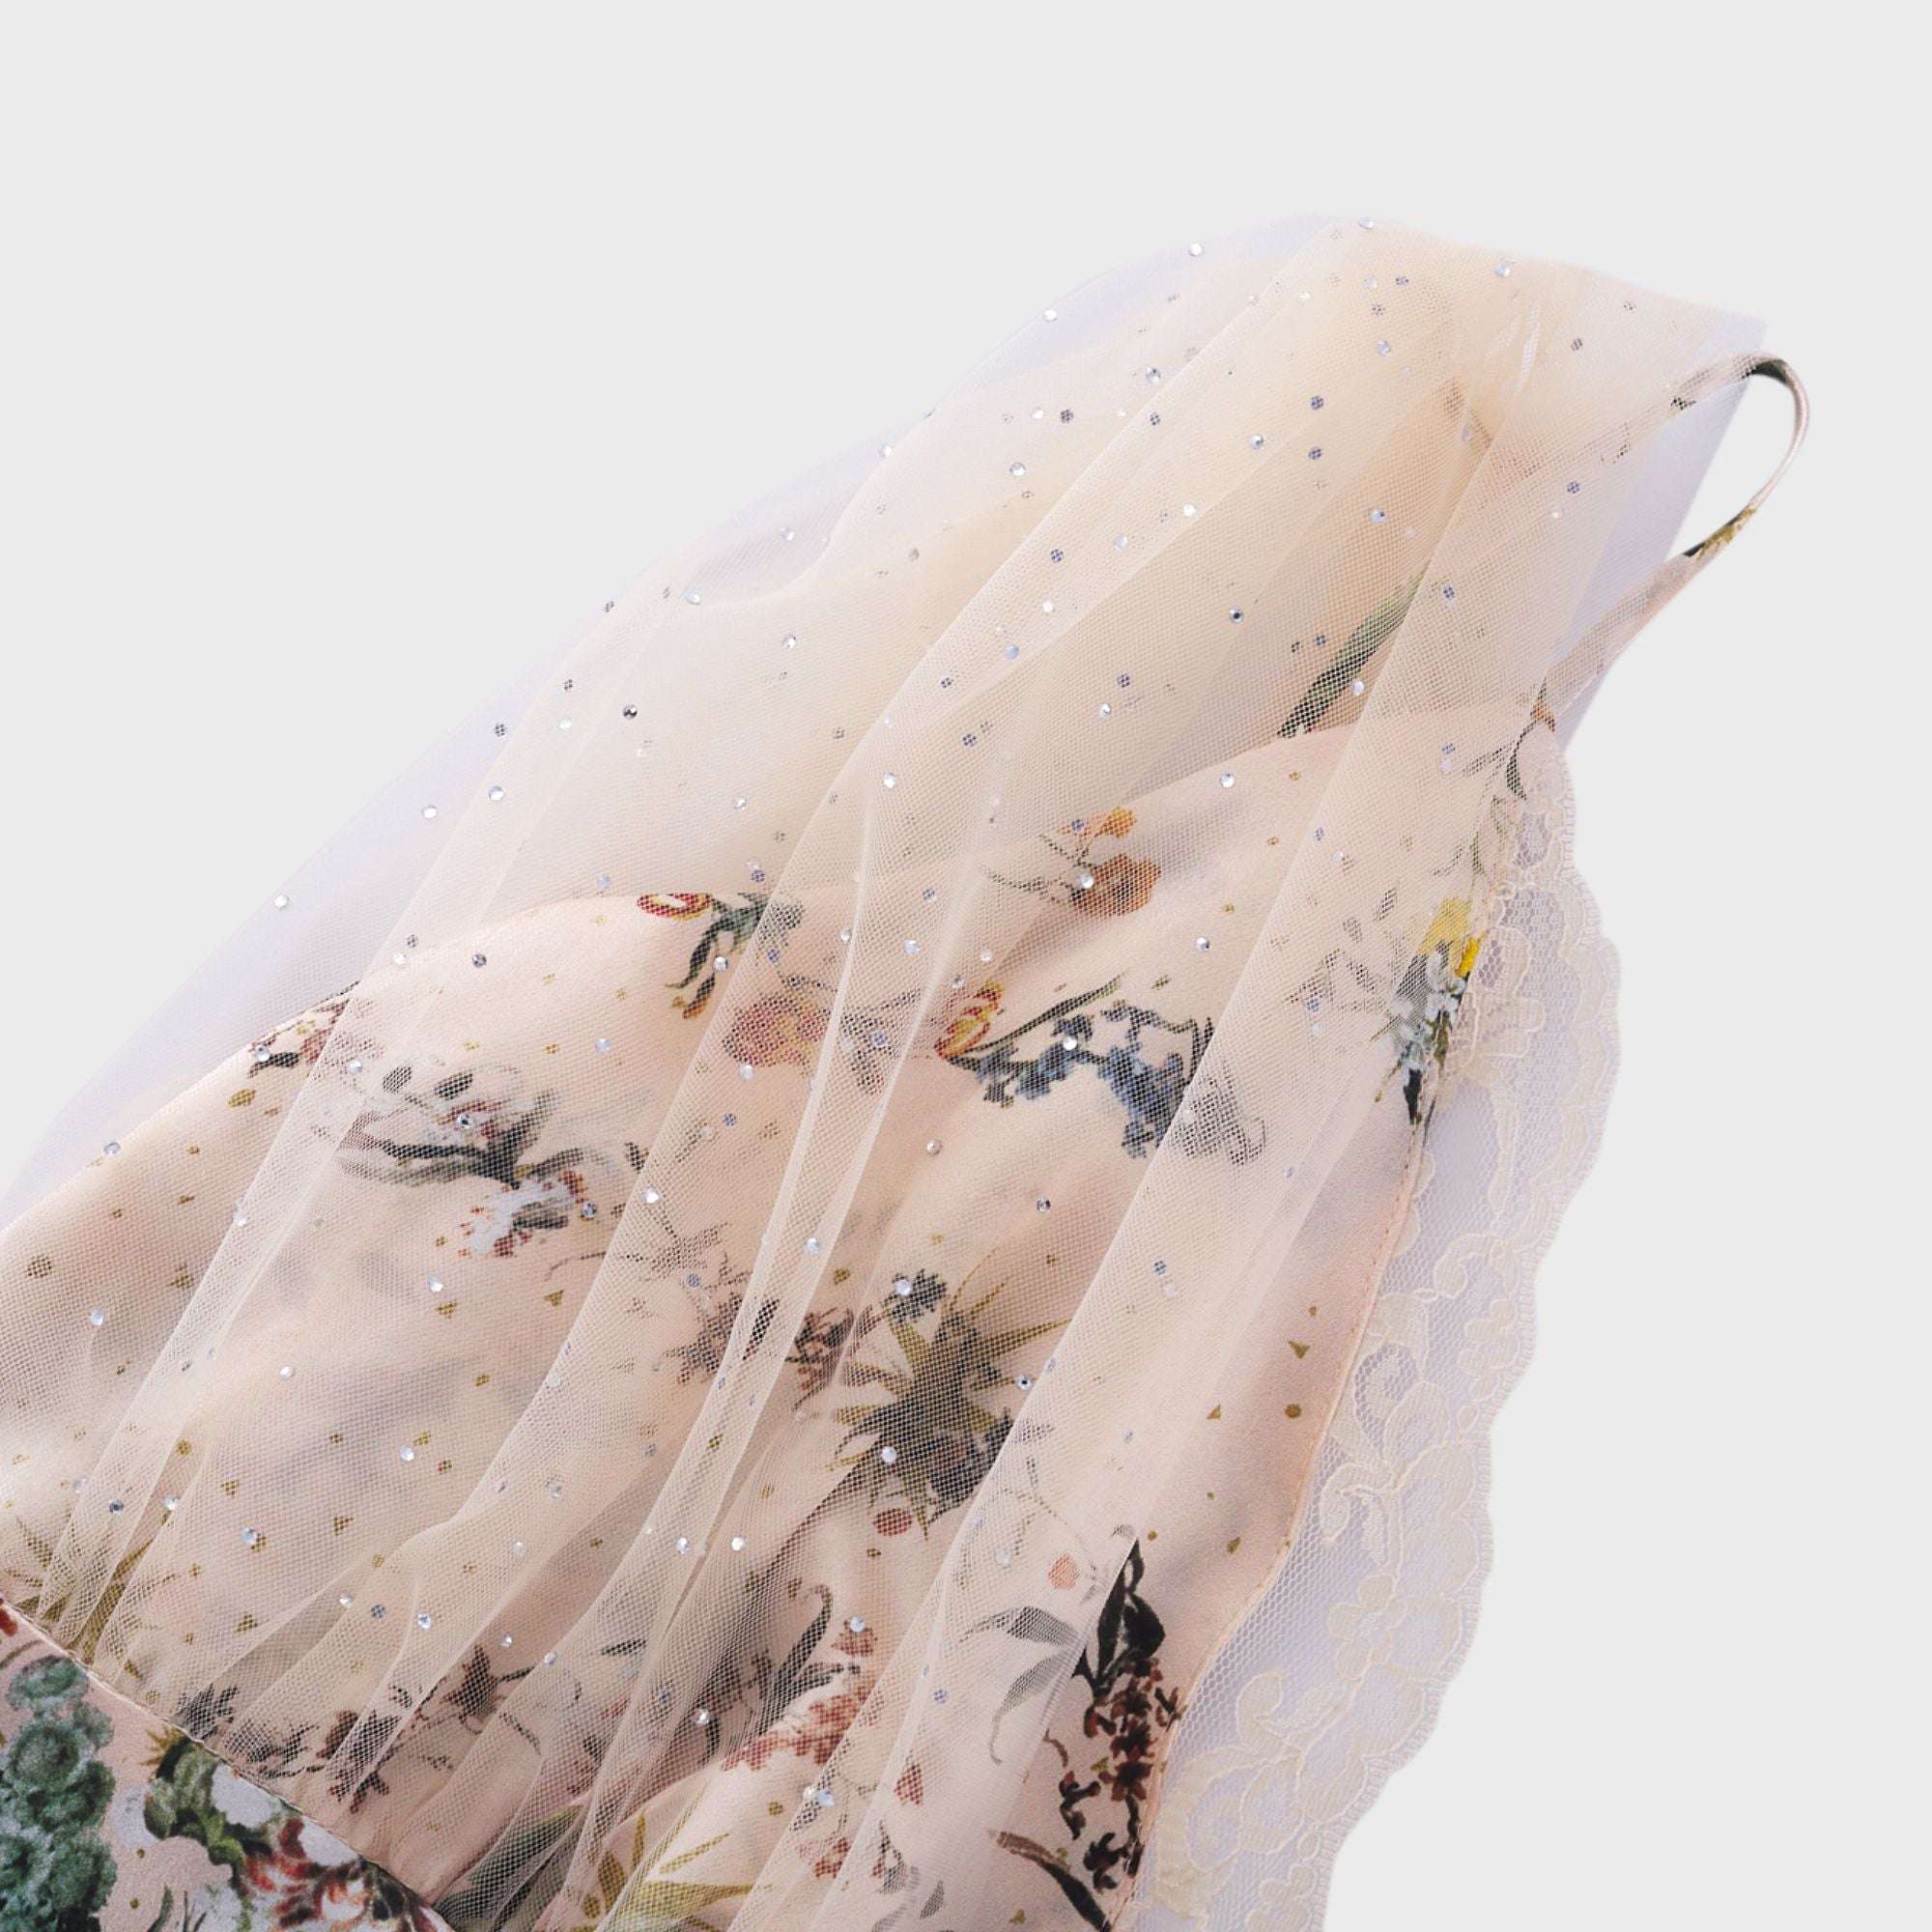 Solada embellished floral-print maxi dress